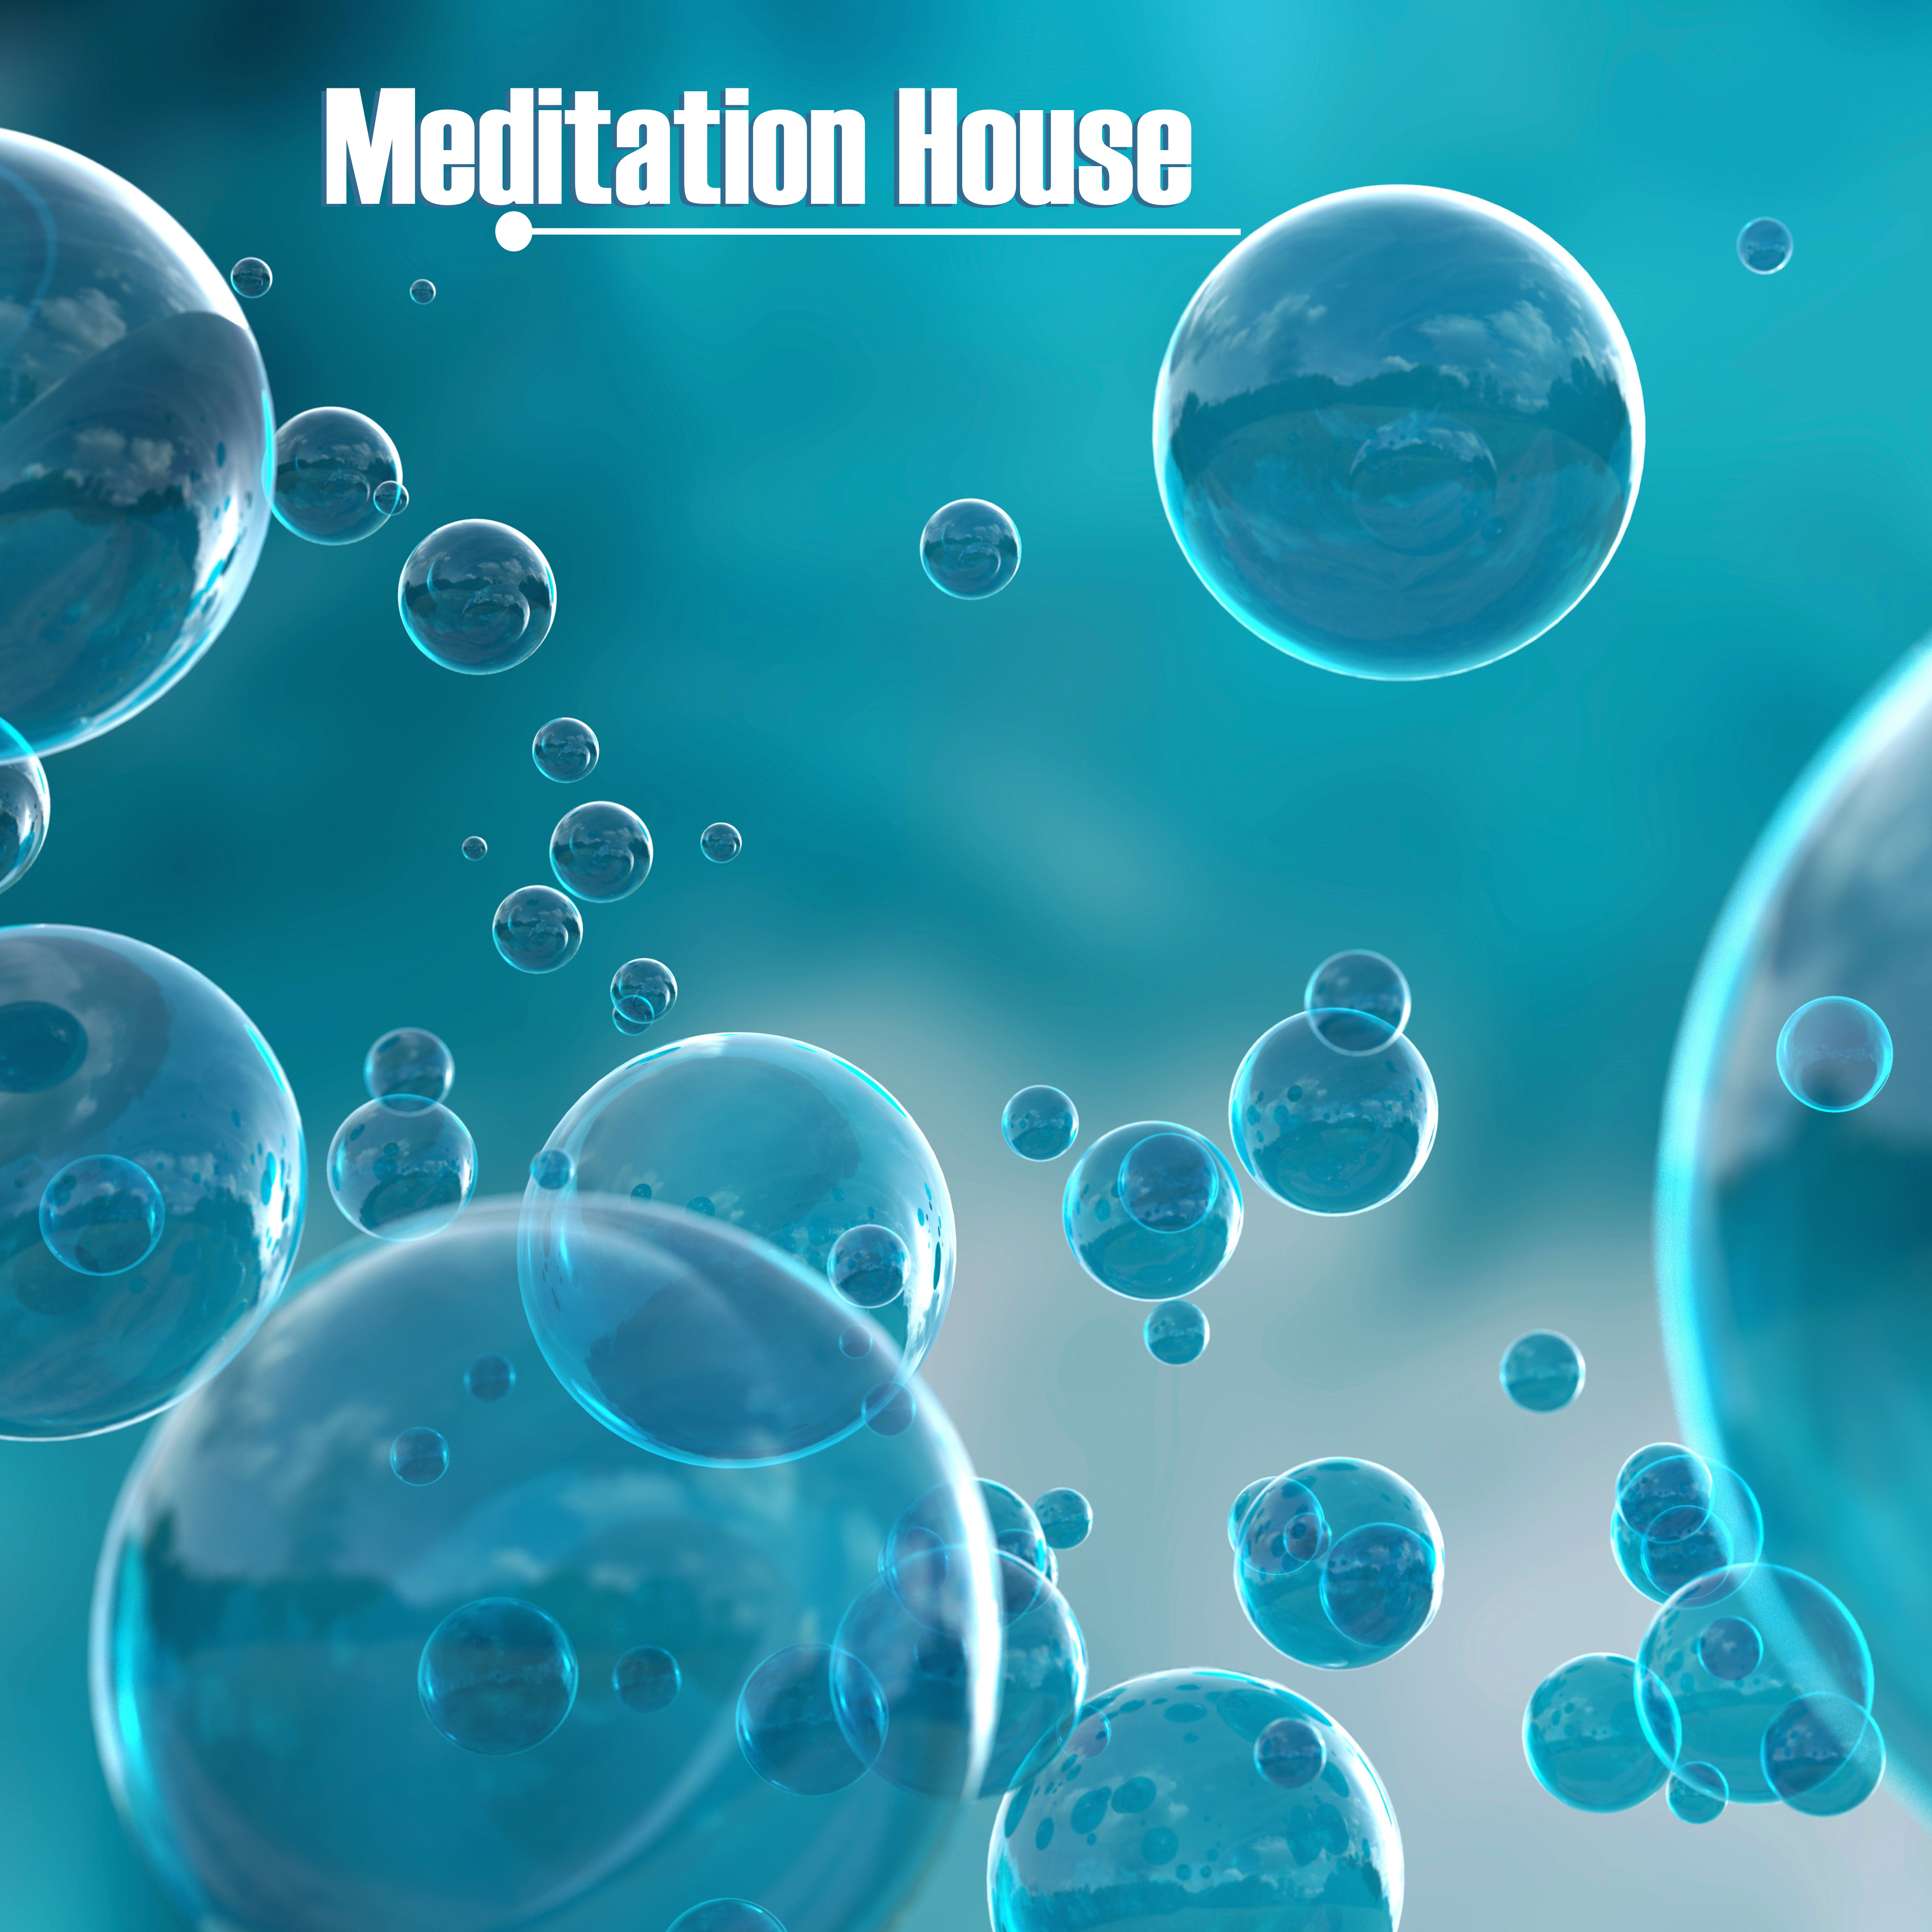 Meditation House